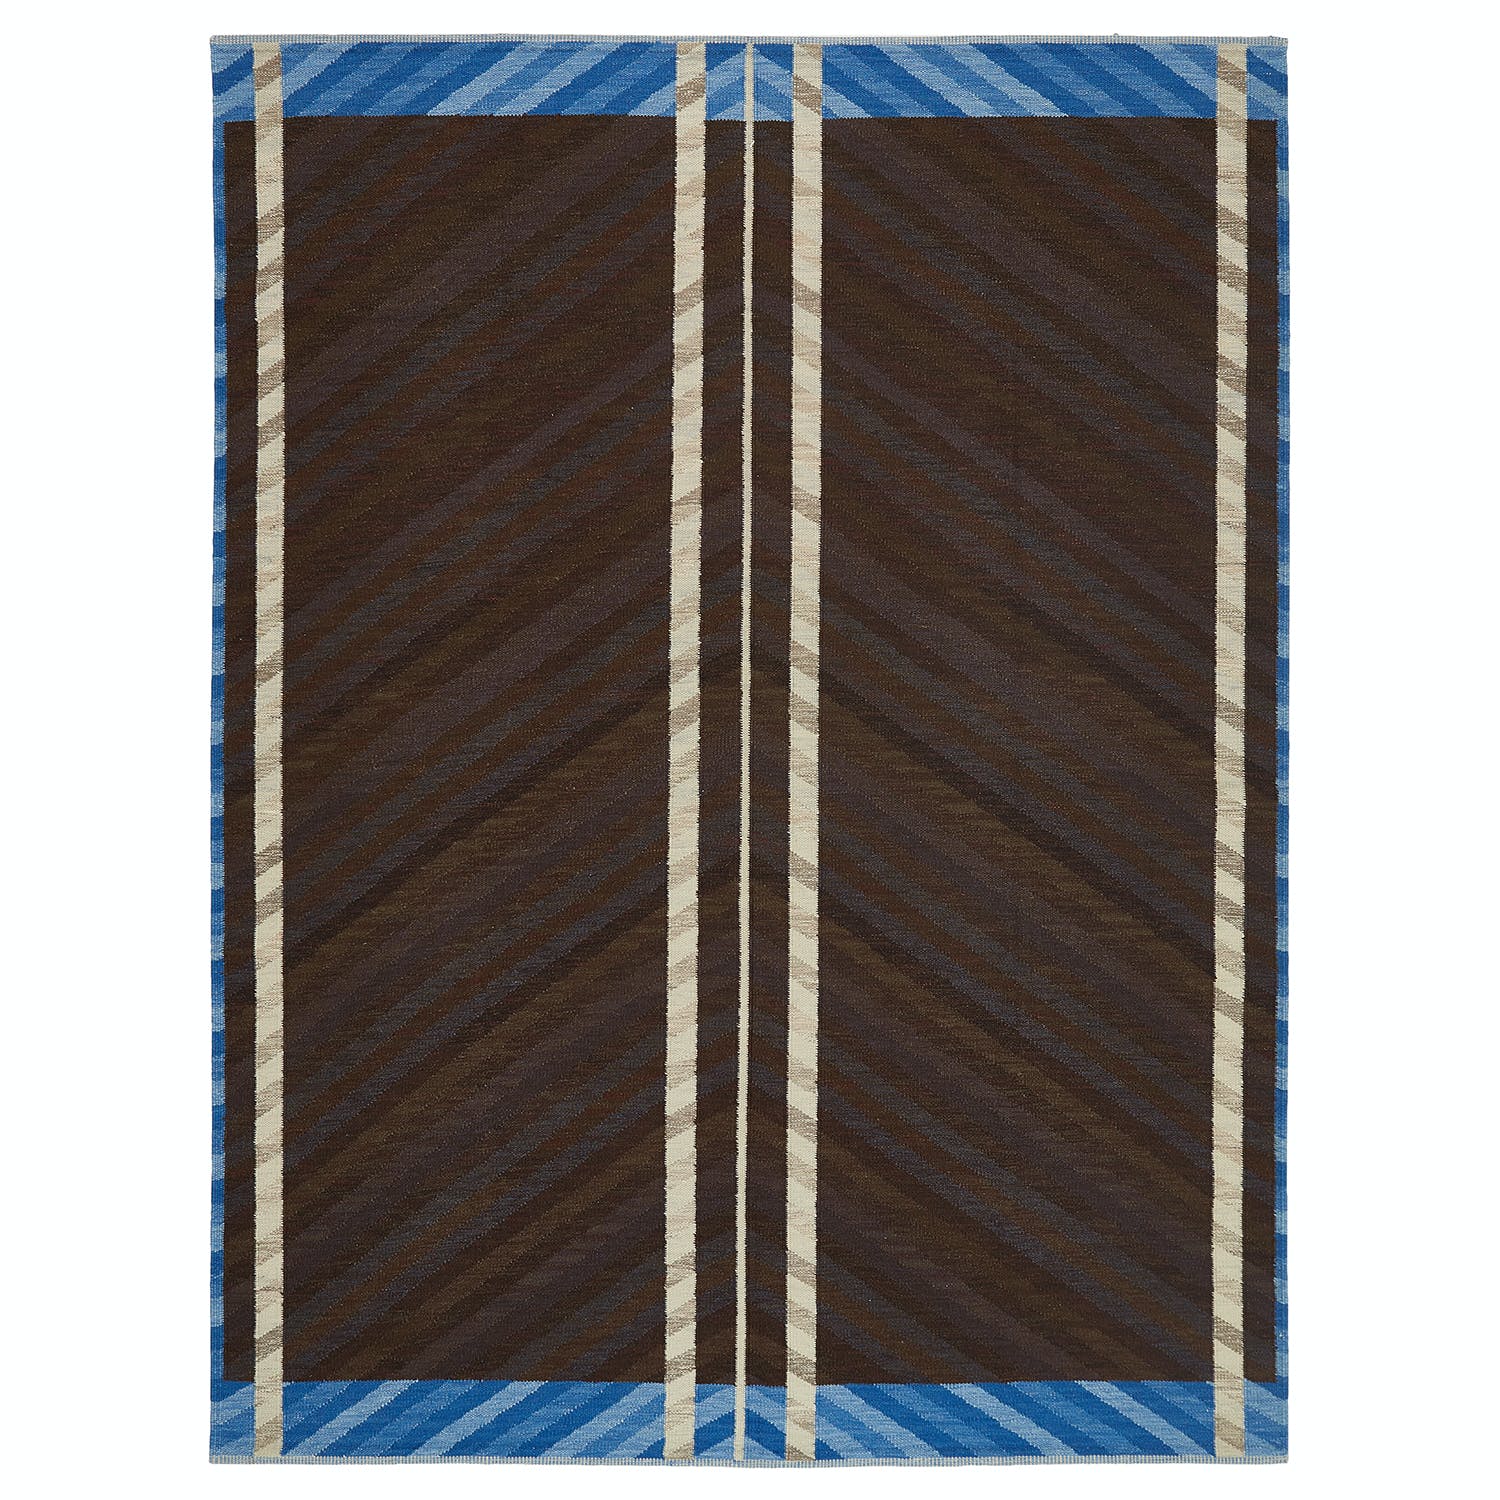 Rectangular rug features dark brown herringbone pattern with contrasting stripes